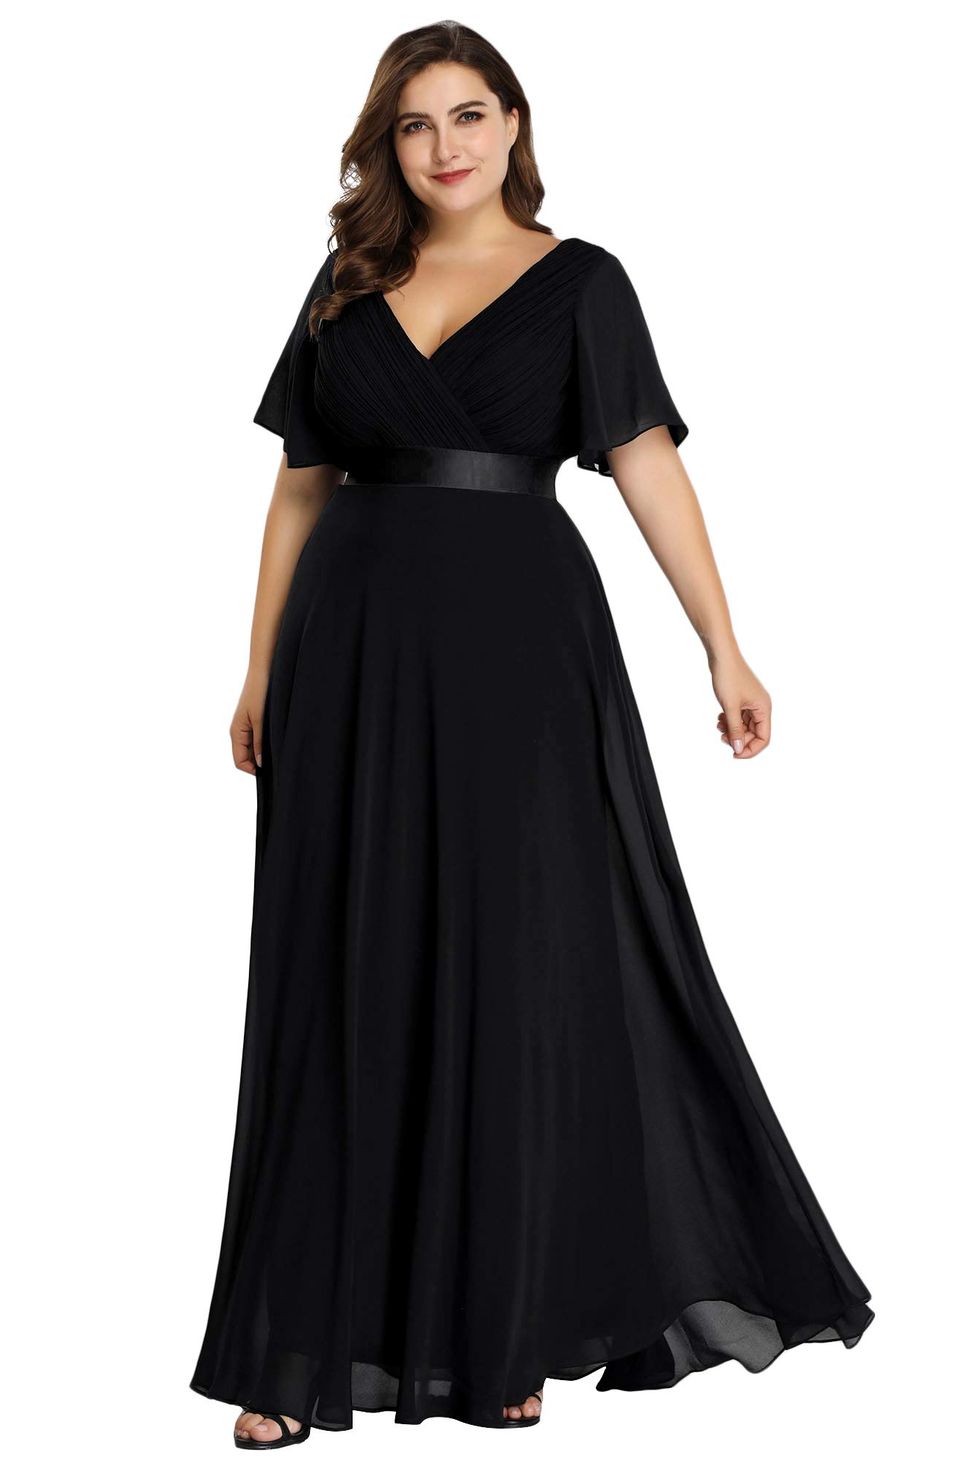 Elegant Solid Off the Shoulder Fit and Flare Short Sleeve Black Plus Size  Dresses (Women's) 